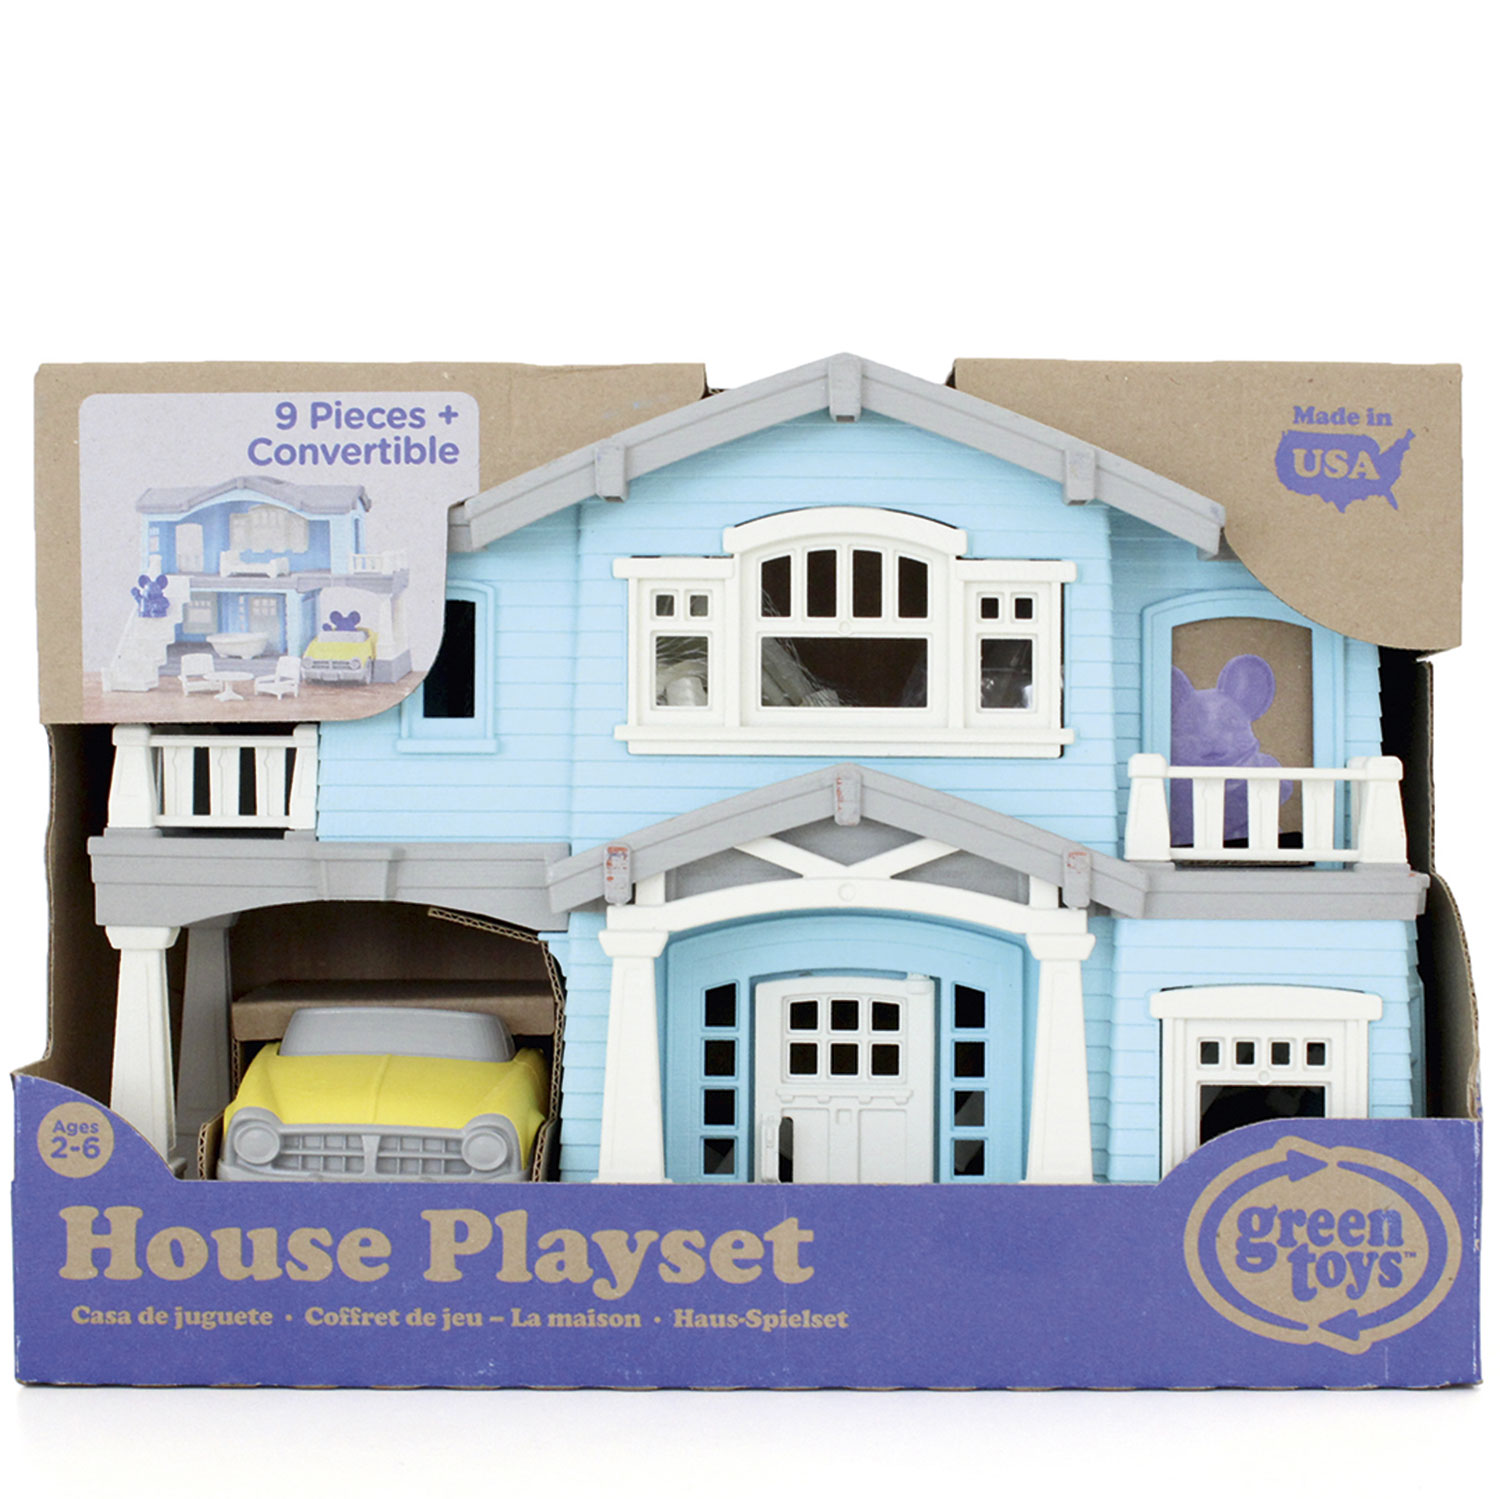 Haus Spielset blau / House Playset blue